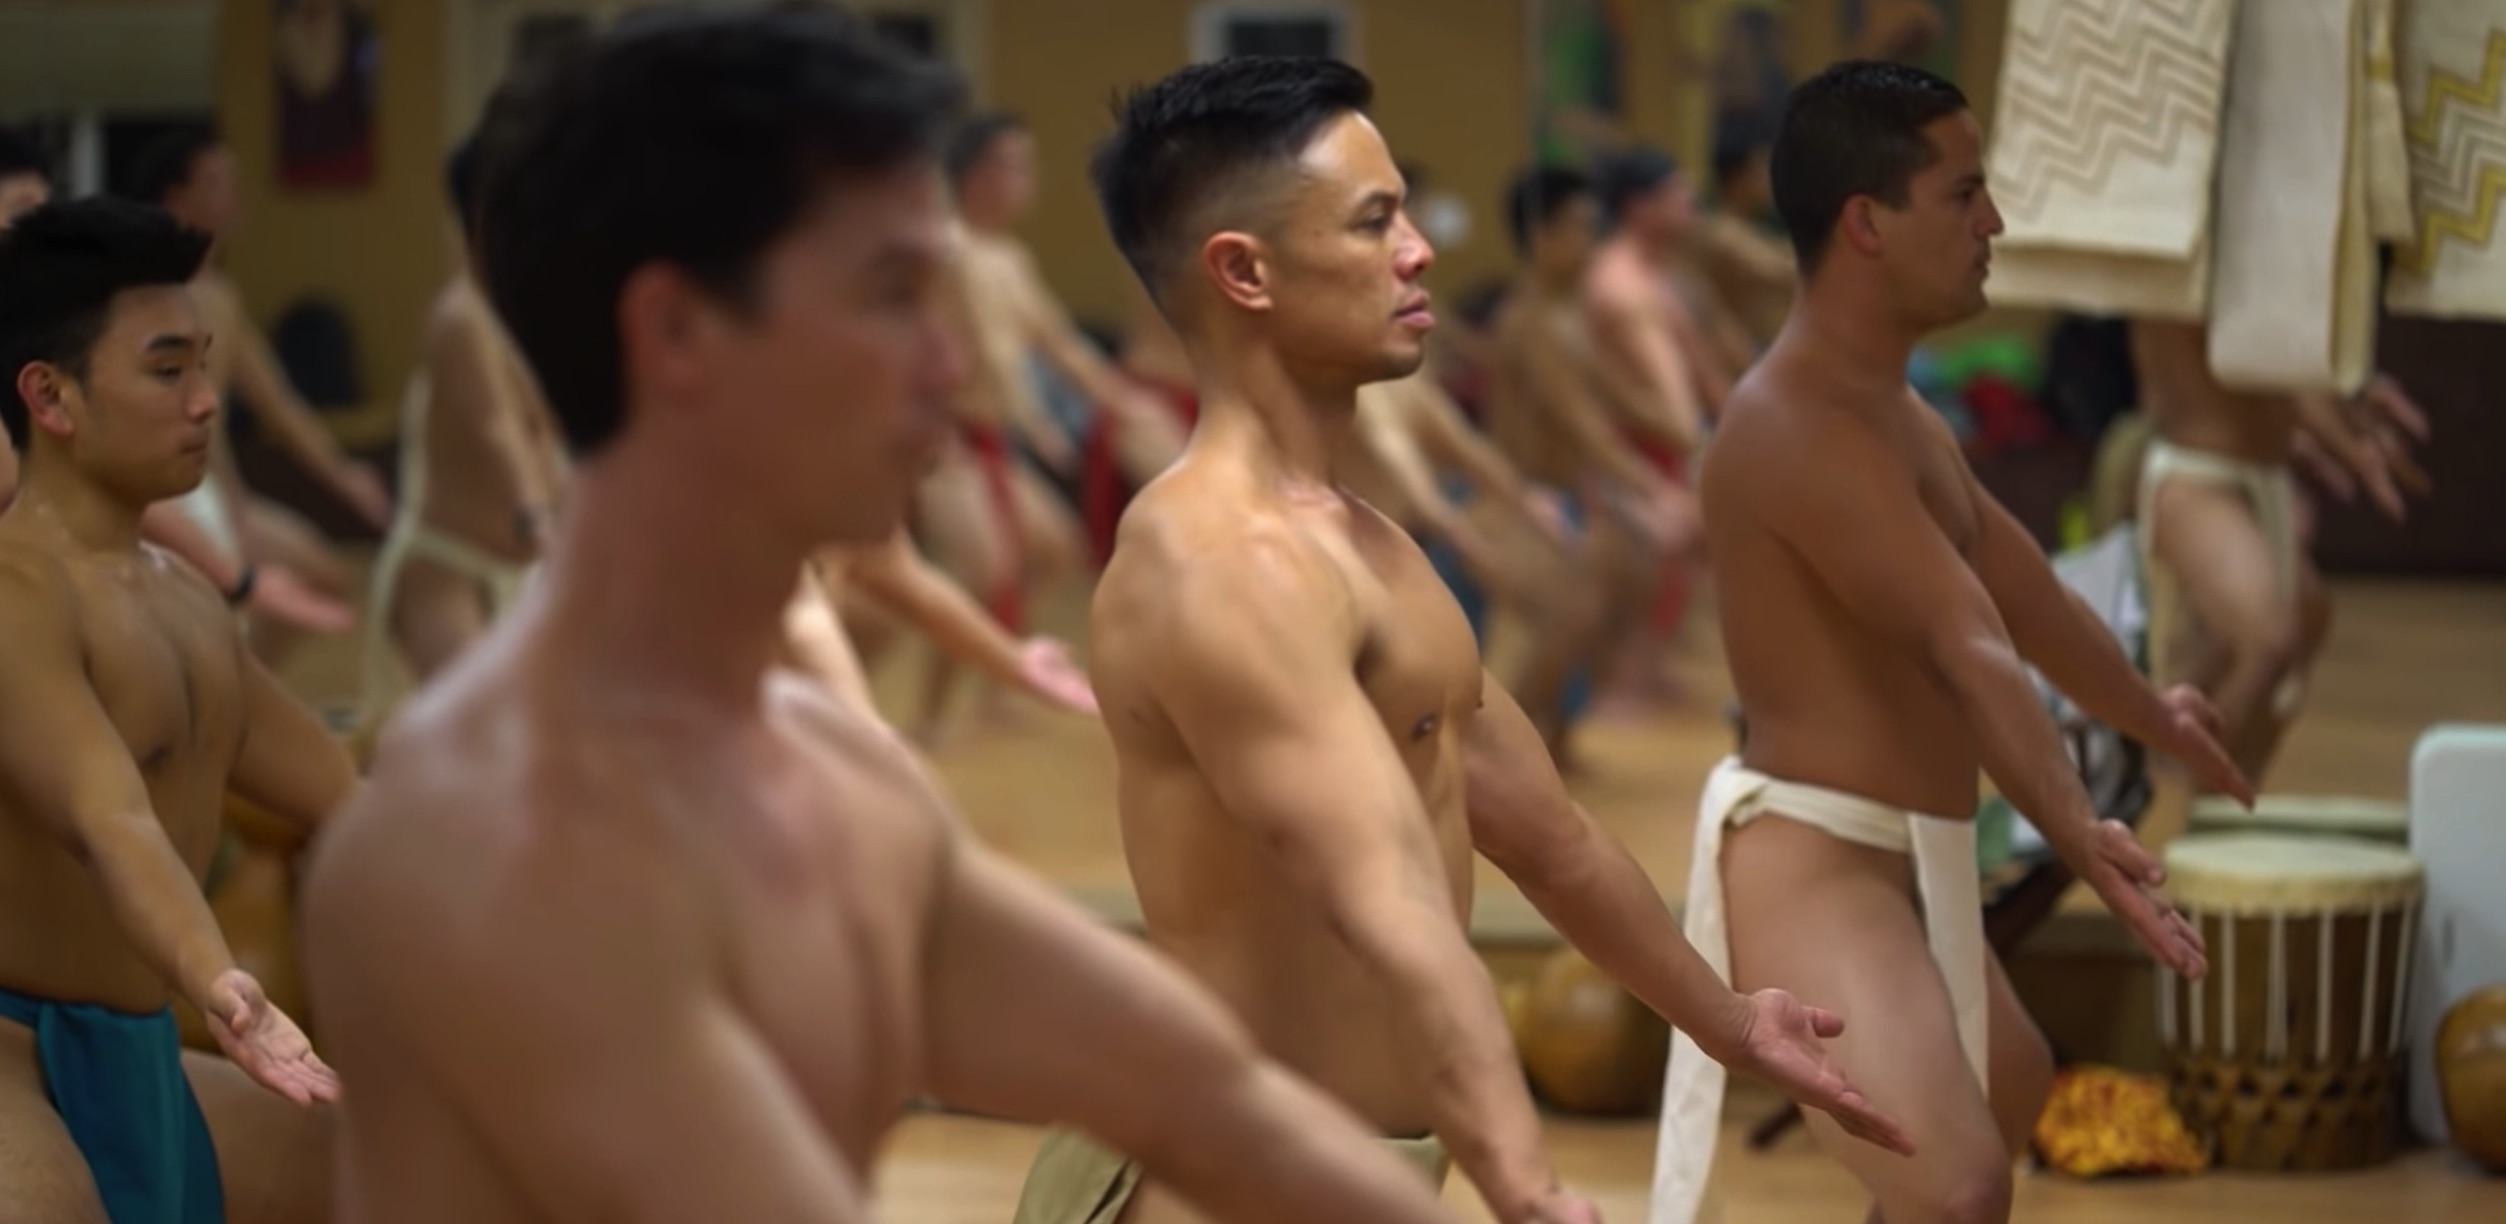 Beautiful men rehearse hula dancing (brief, no sex)